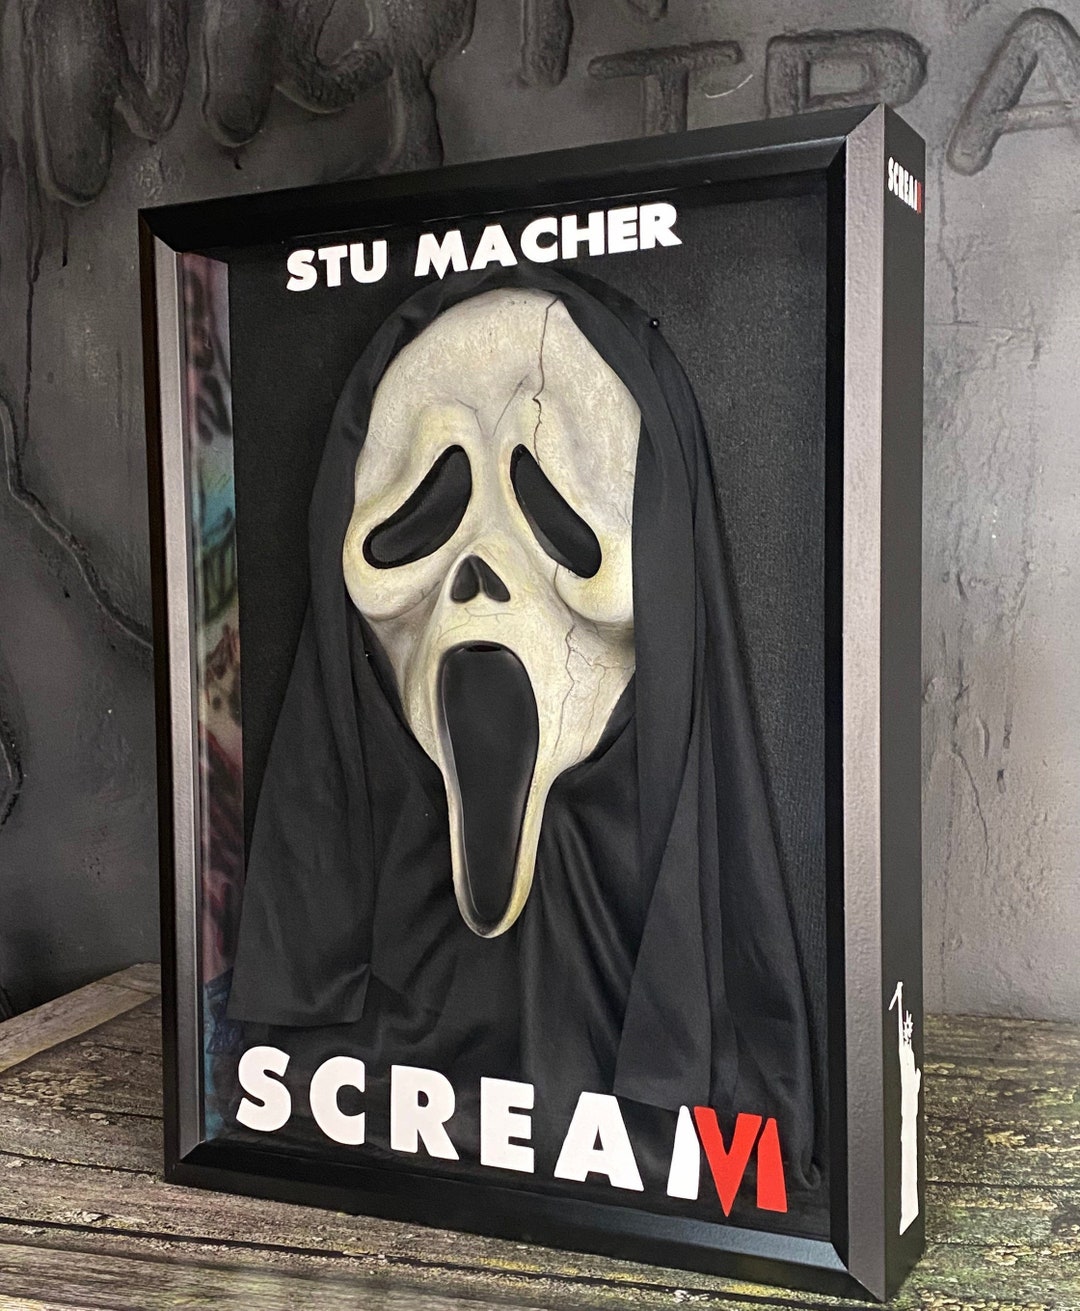 Scream Horror Movie Ghostface Hockey Jersey Officially Licensed Shirt